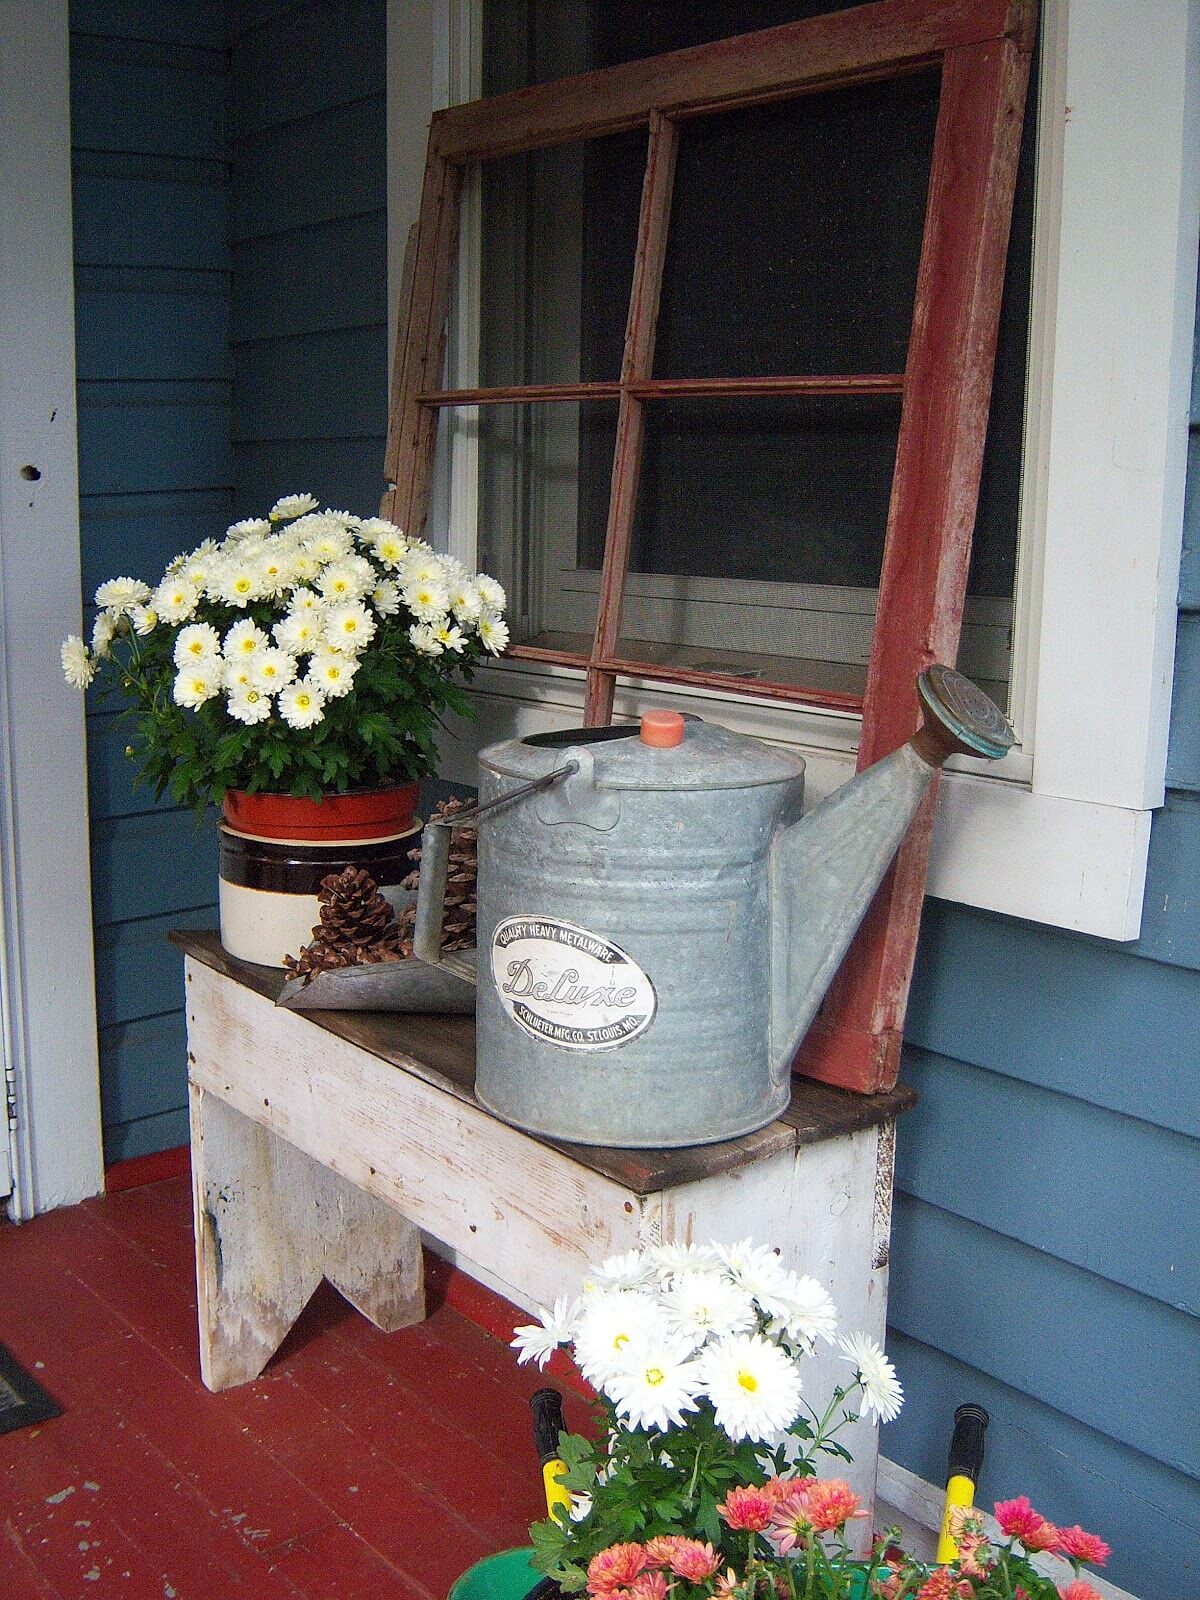 Antique and Rustic Vintage Porch Display